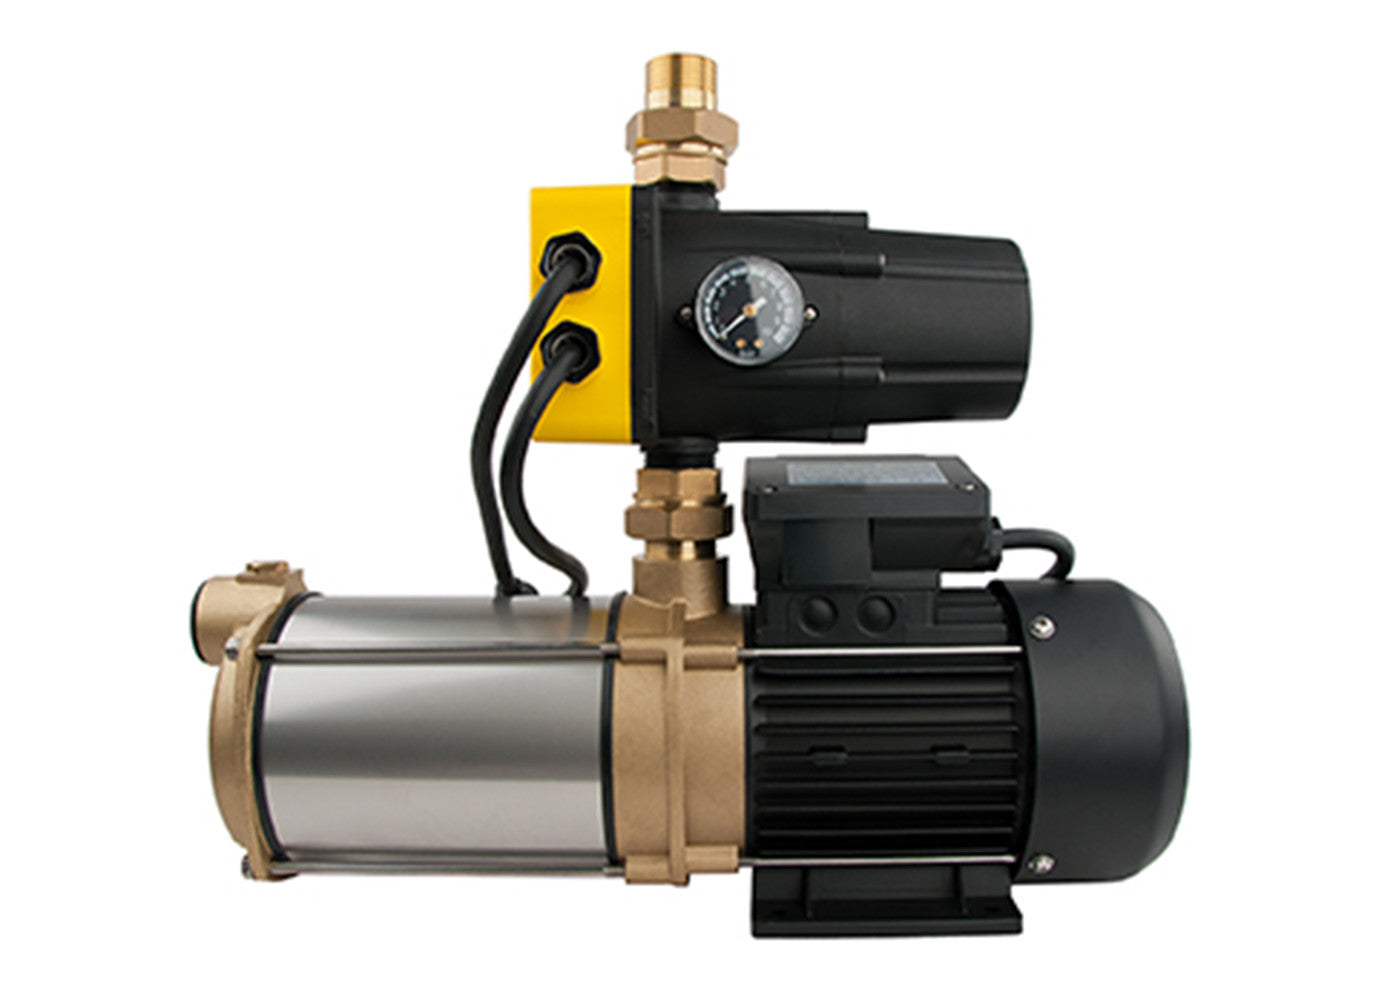 Hauswasserautomat CPS 20-4MB/Kit 05 OPTIMATIC für das Haus